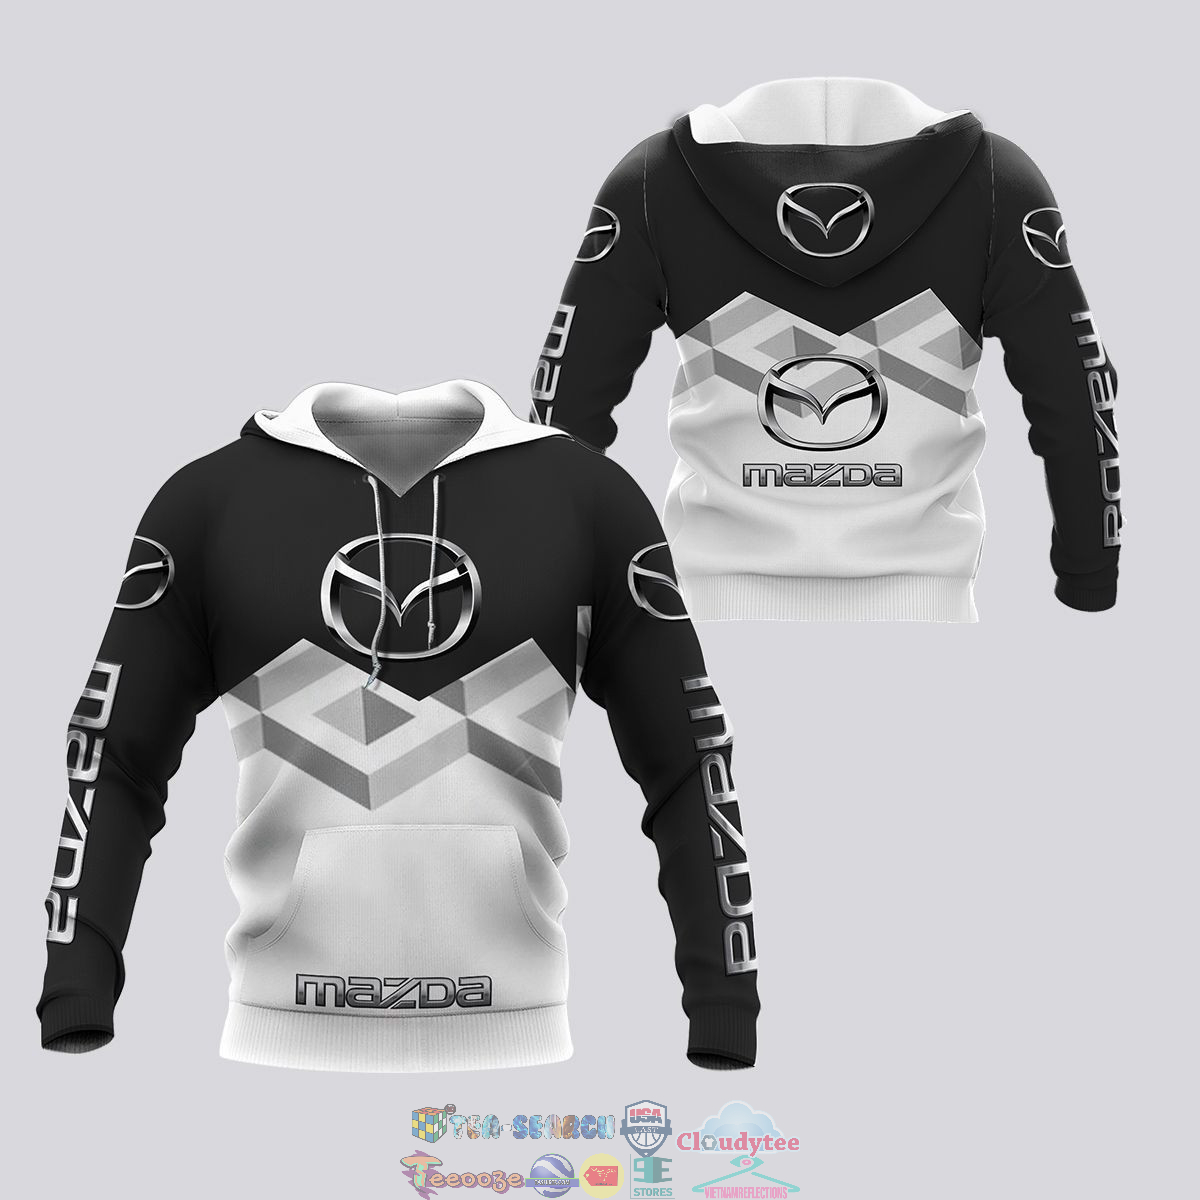 ni32wjXX-TH130822-02xxxMazda-ver-6-3D-hoodie-and-t-shirt3.jpg